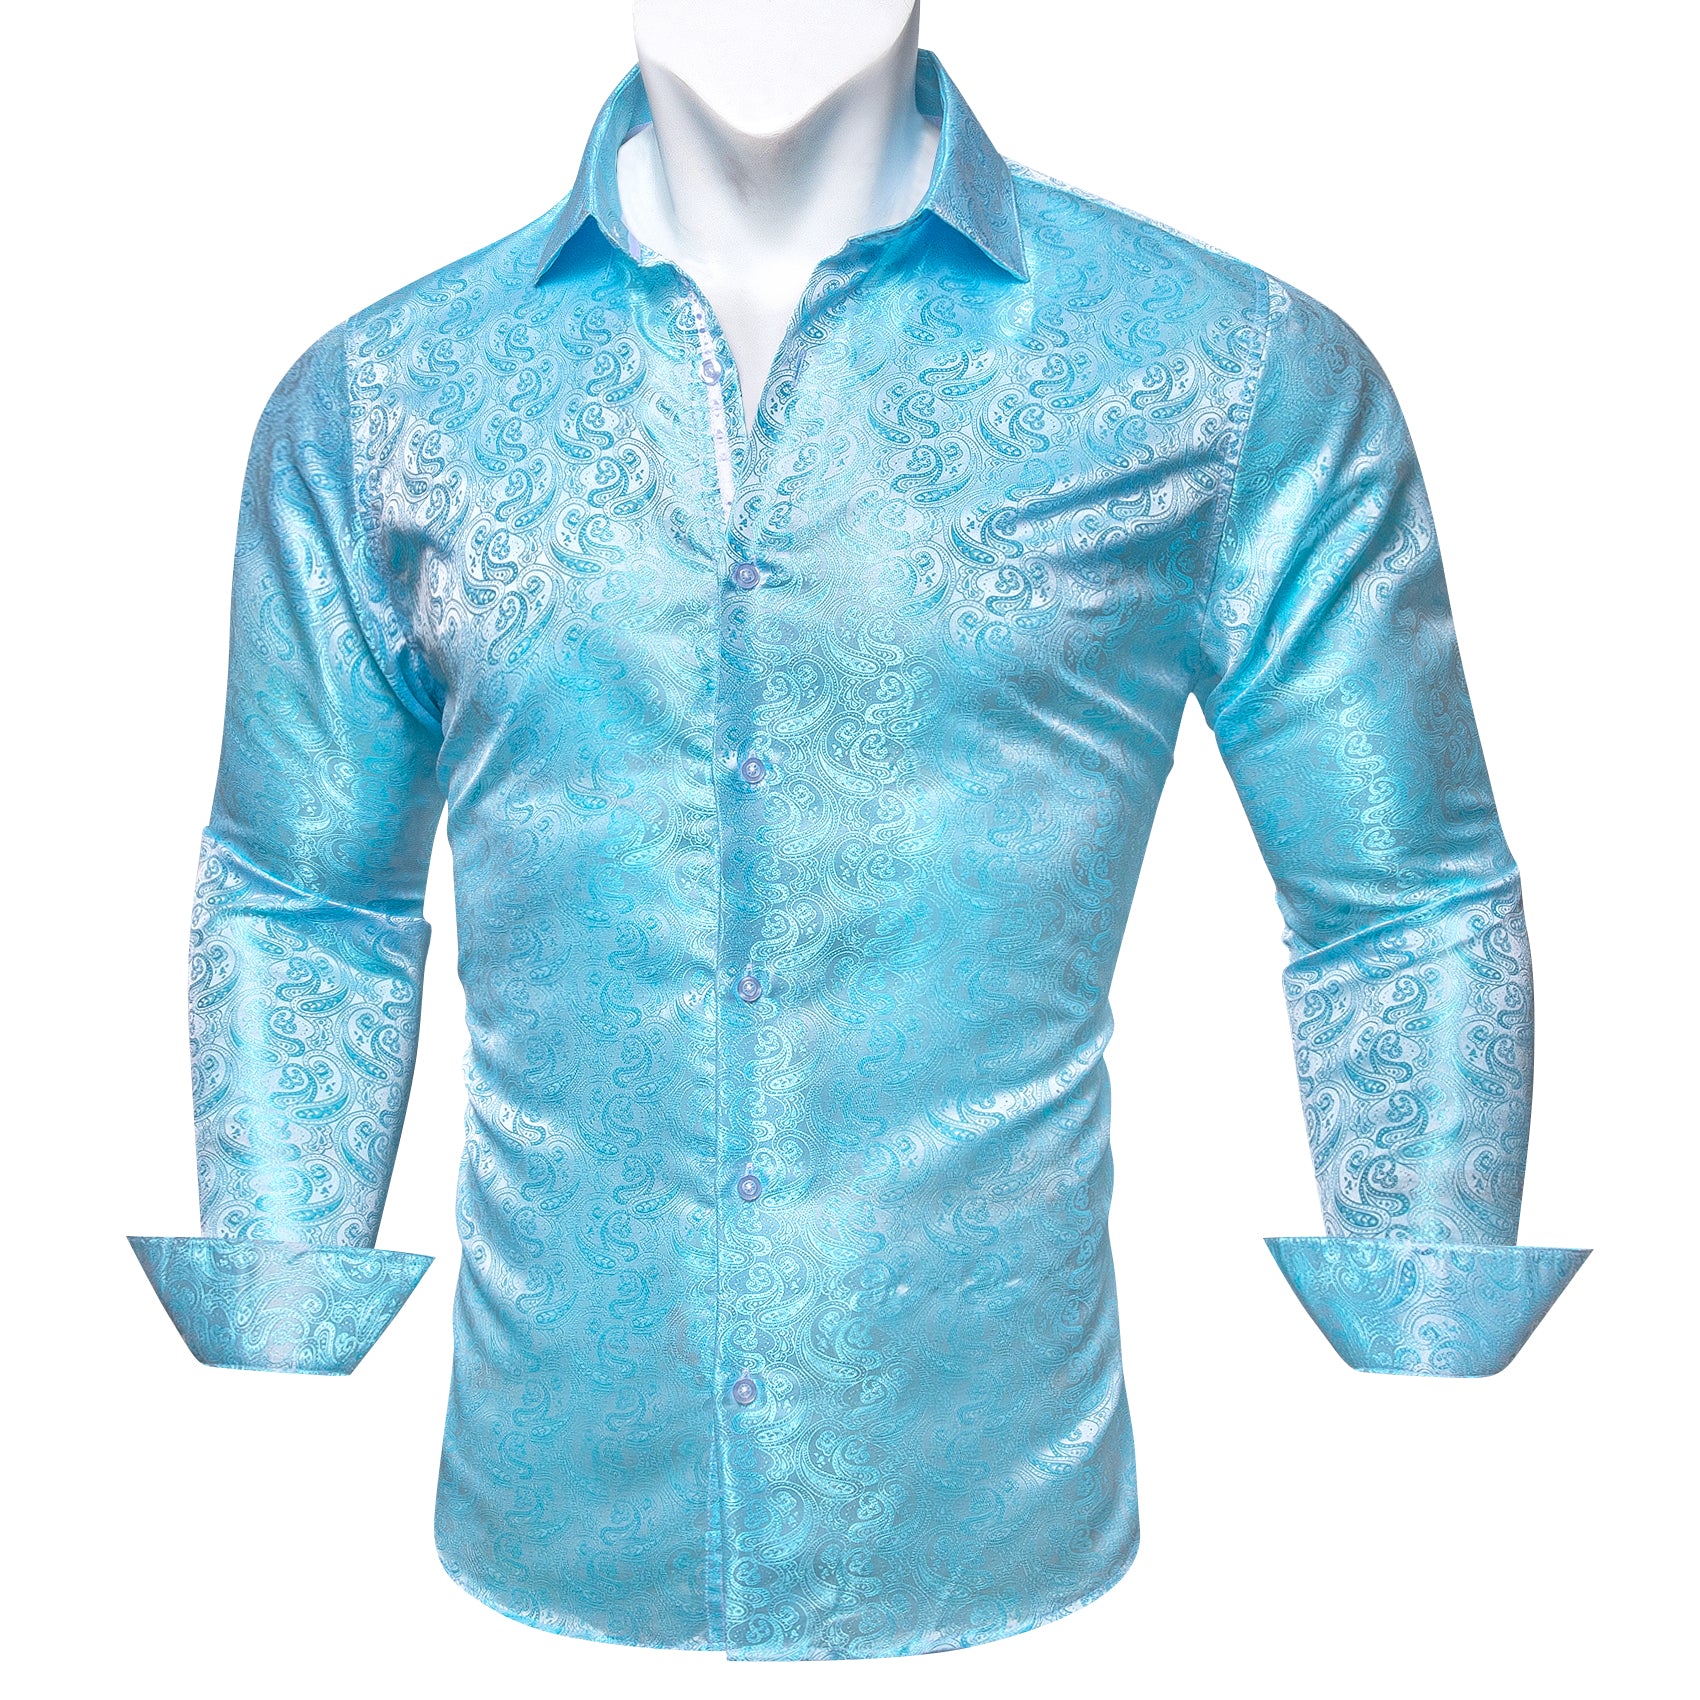 Barry.wang Teal Blue Paisley Silk Shirt